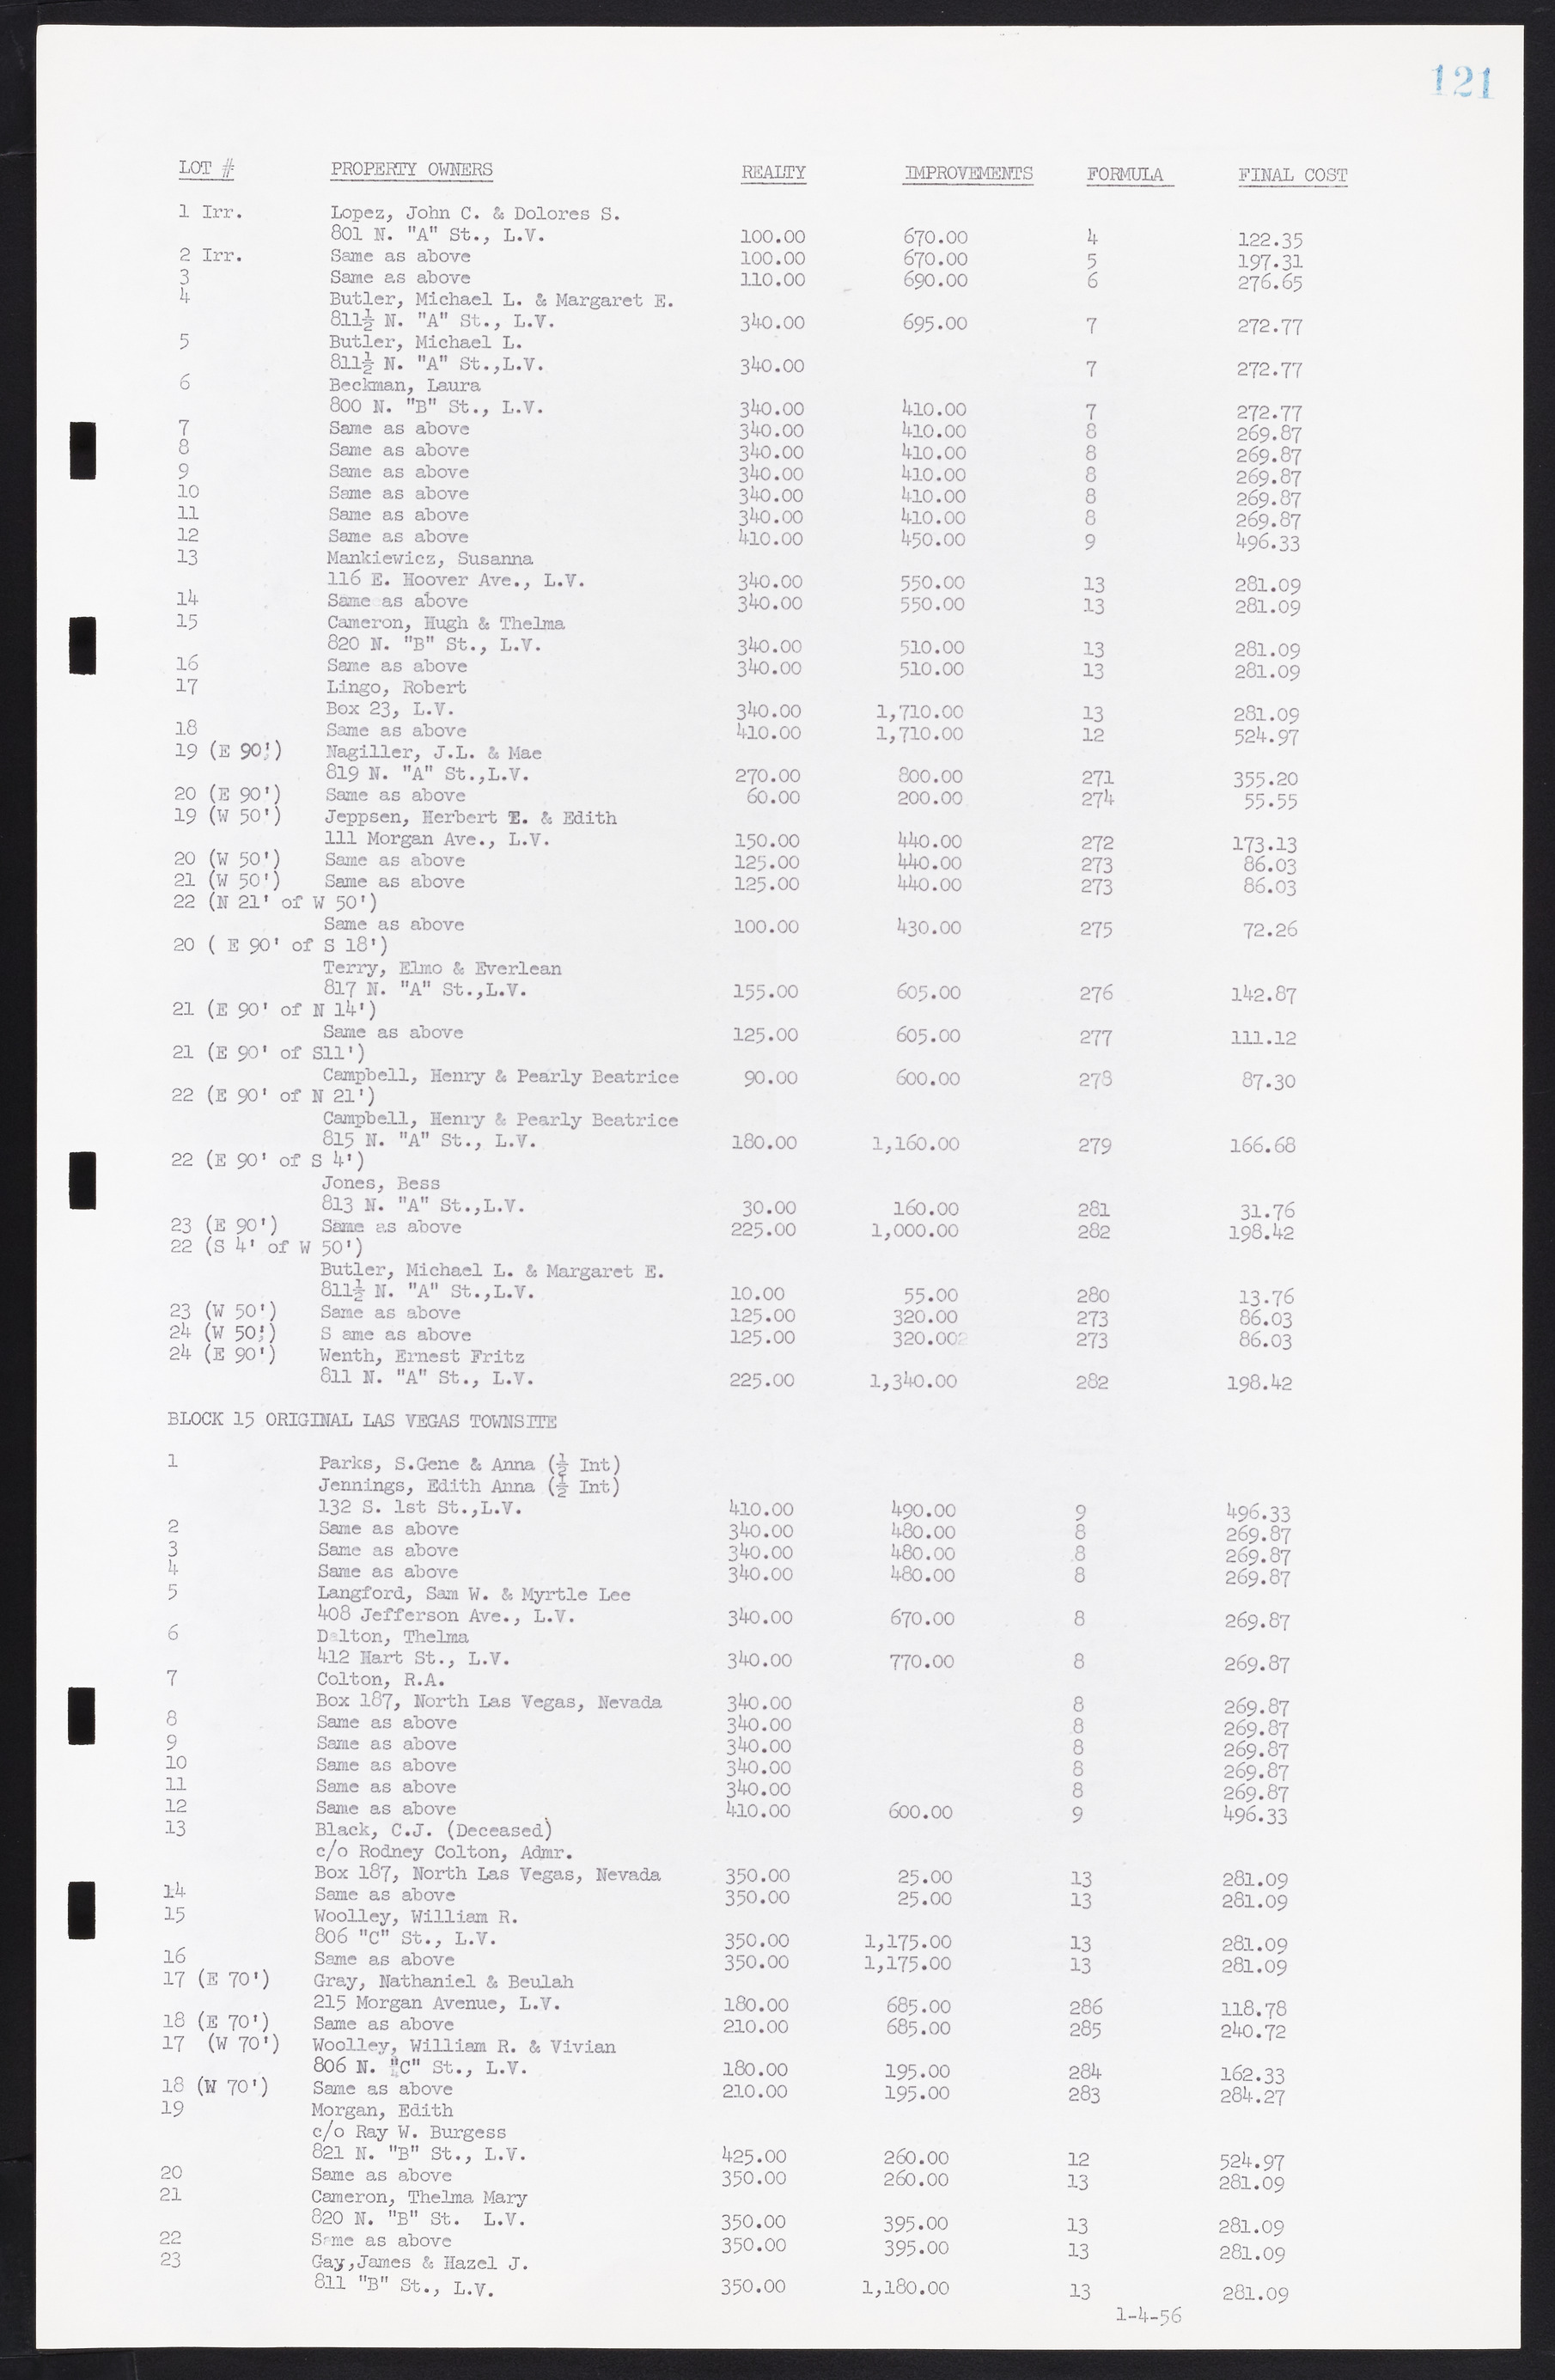 Las Vegas City Commission Minutes, September 21, 1955 to November 20, 1957, lvc000010-131